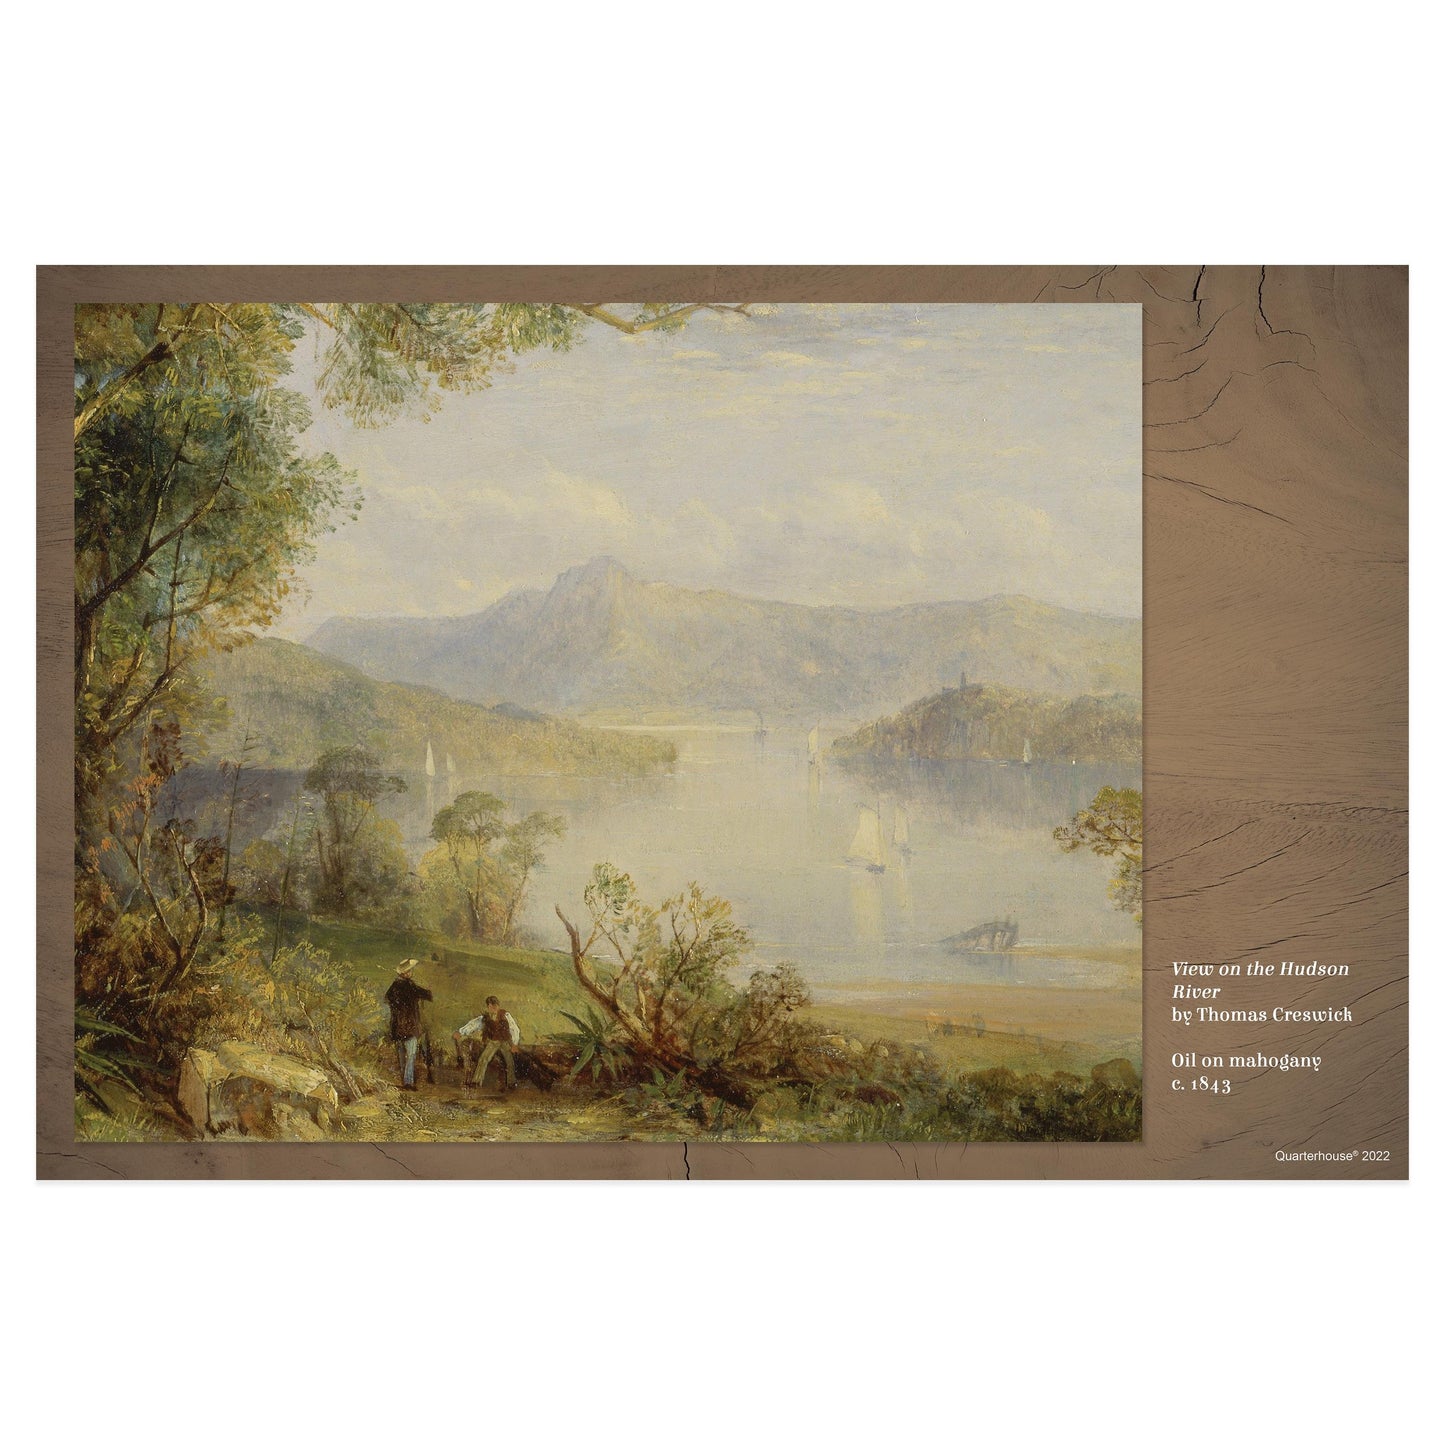 Quarterhouse 'View on the Hudson River' Hudson School Poster, Art Classroom Materials for Teachers